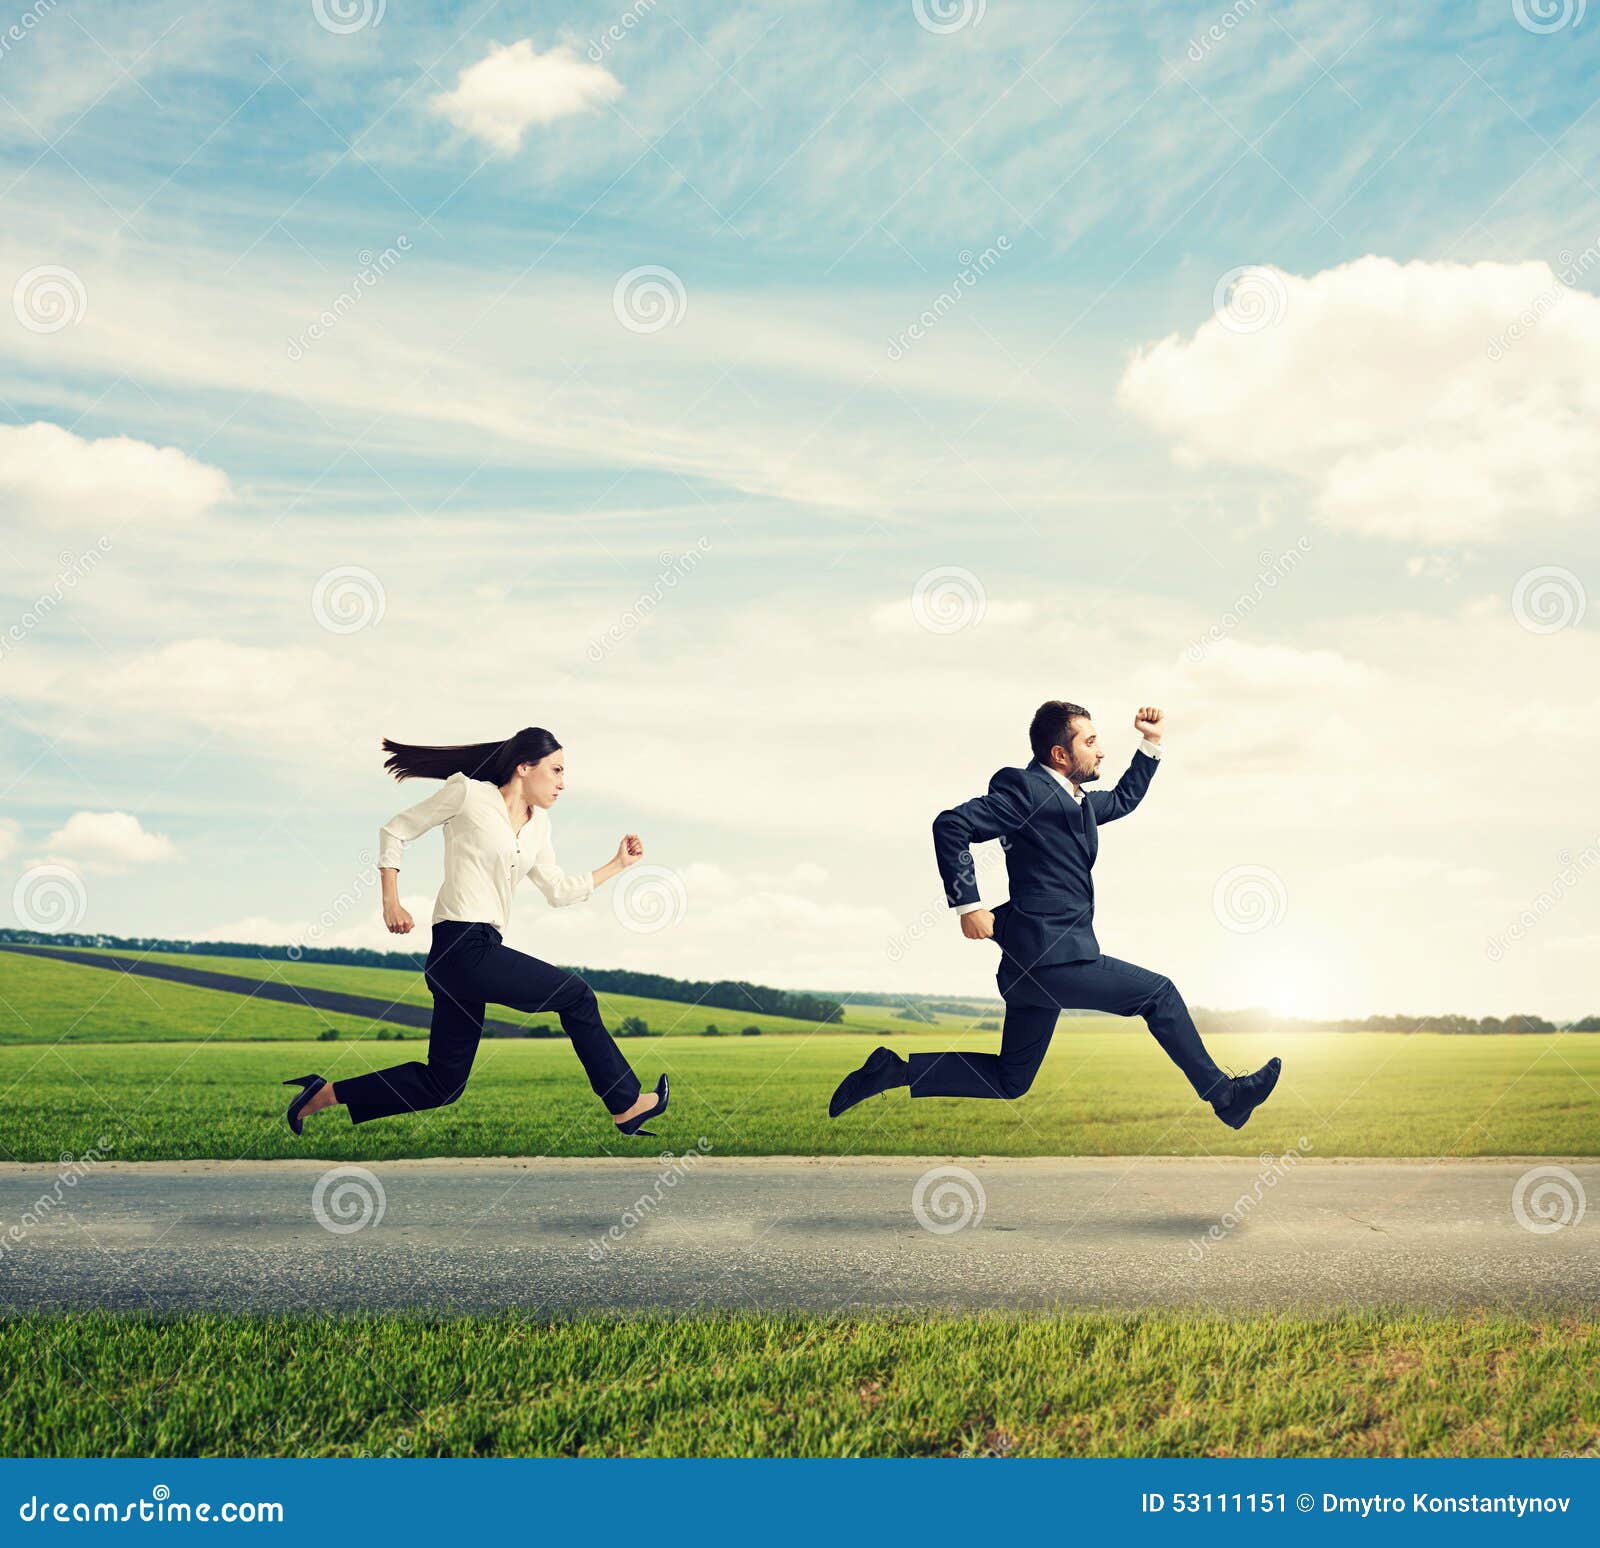 man-woman-formal-wear-running-women-fast-road-outdoor-against-background-beautiful-scenery-53111151.jpg